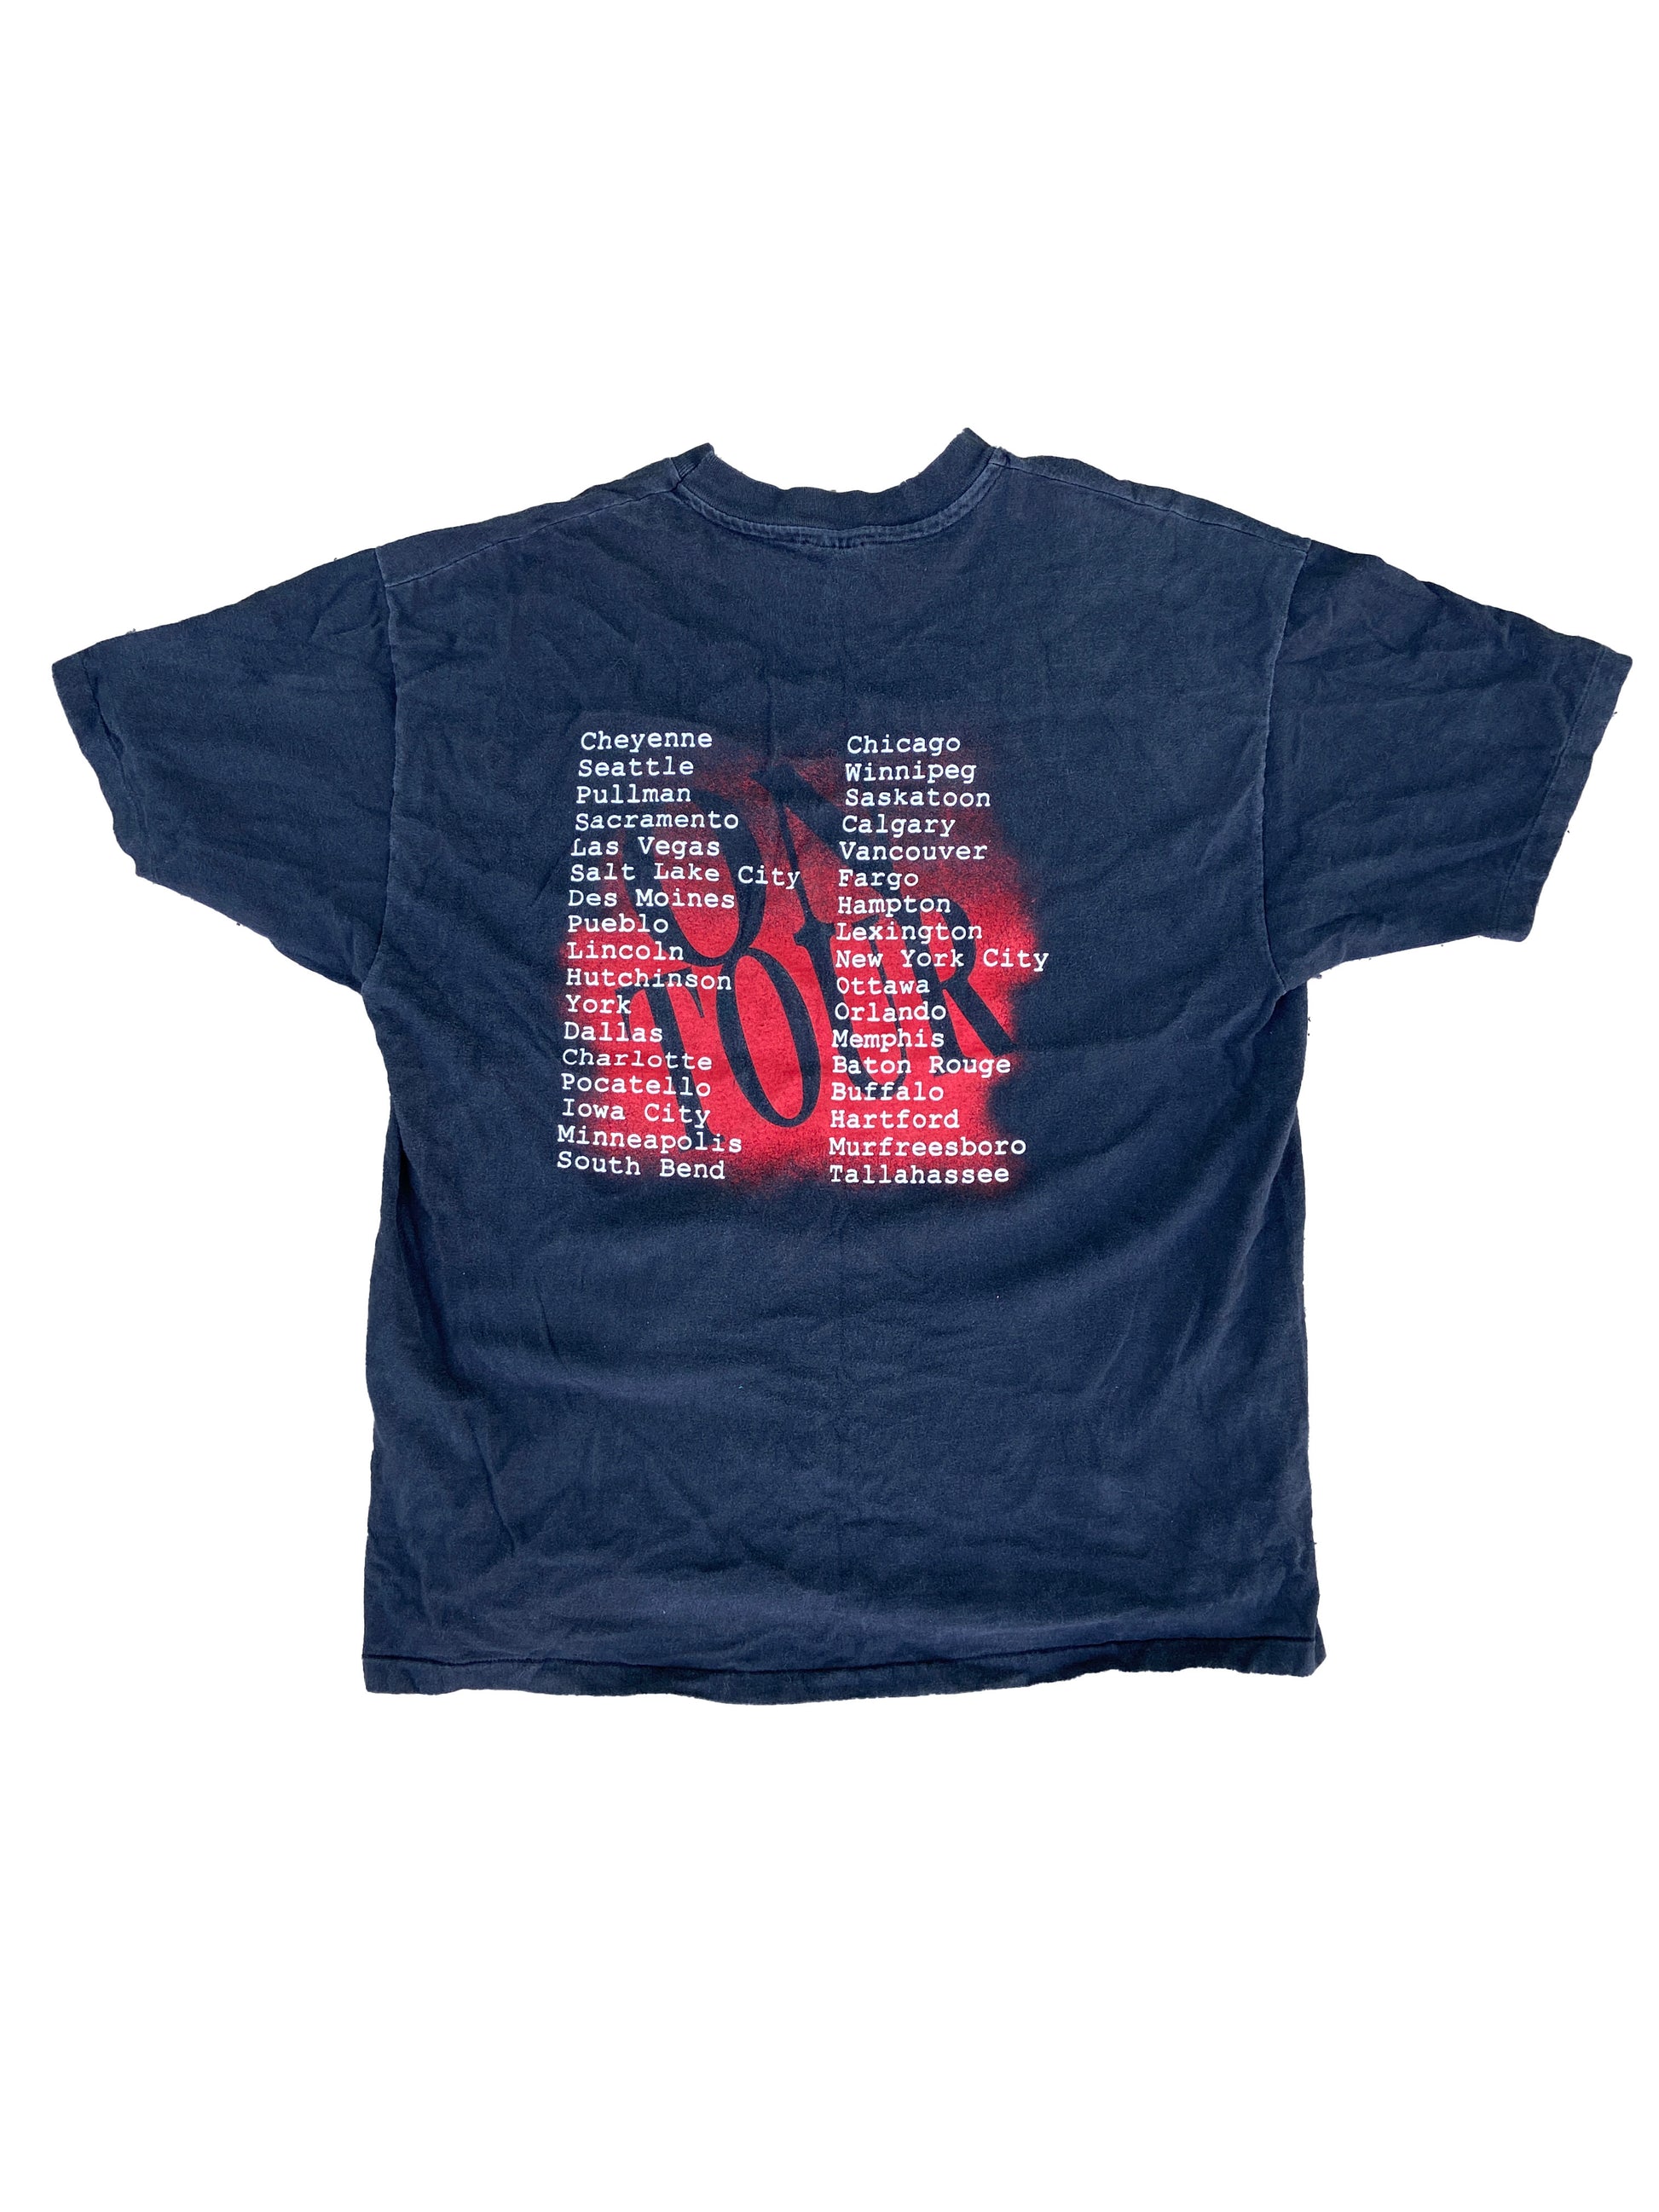 Vintage Garth Brooks 1993 Tour T-shirt XL -  Canada